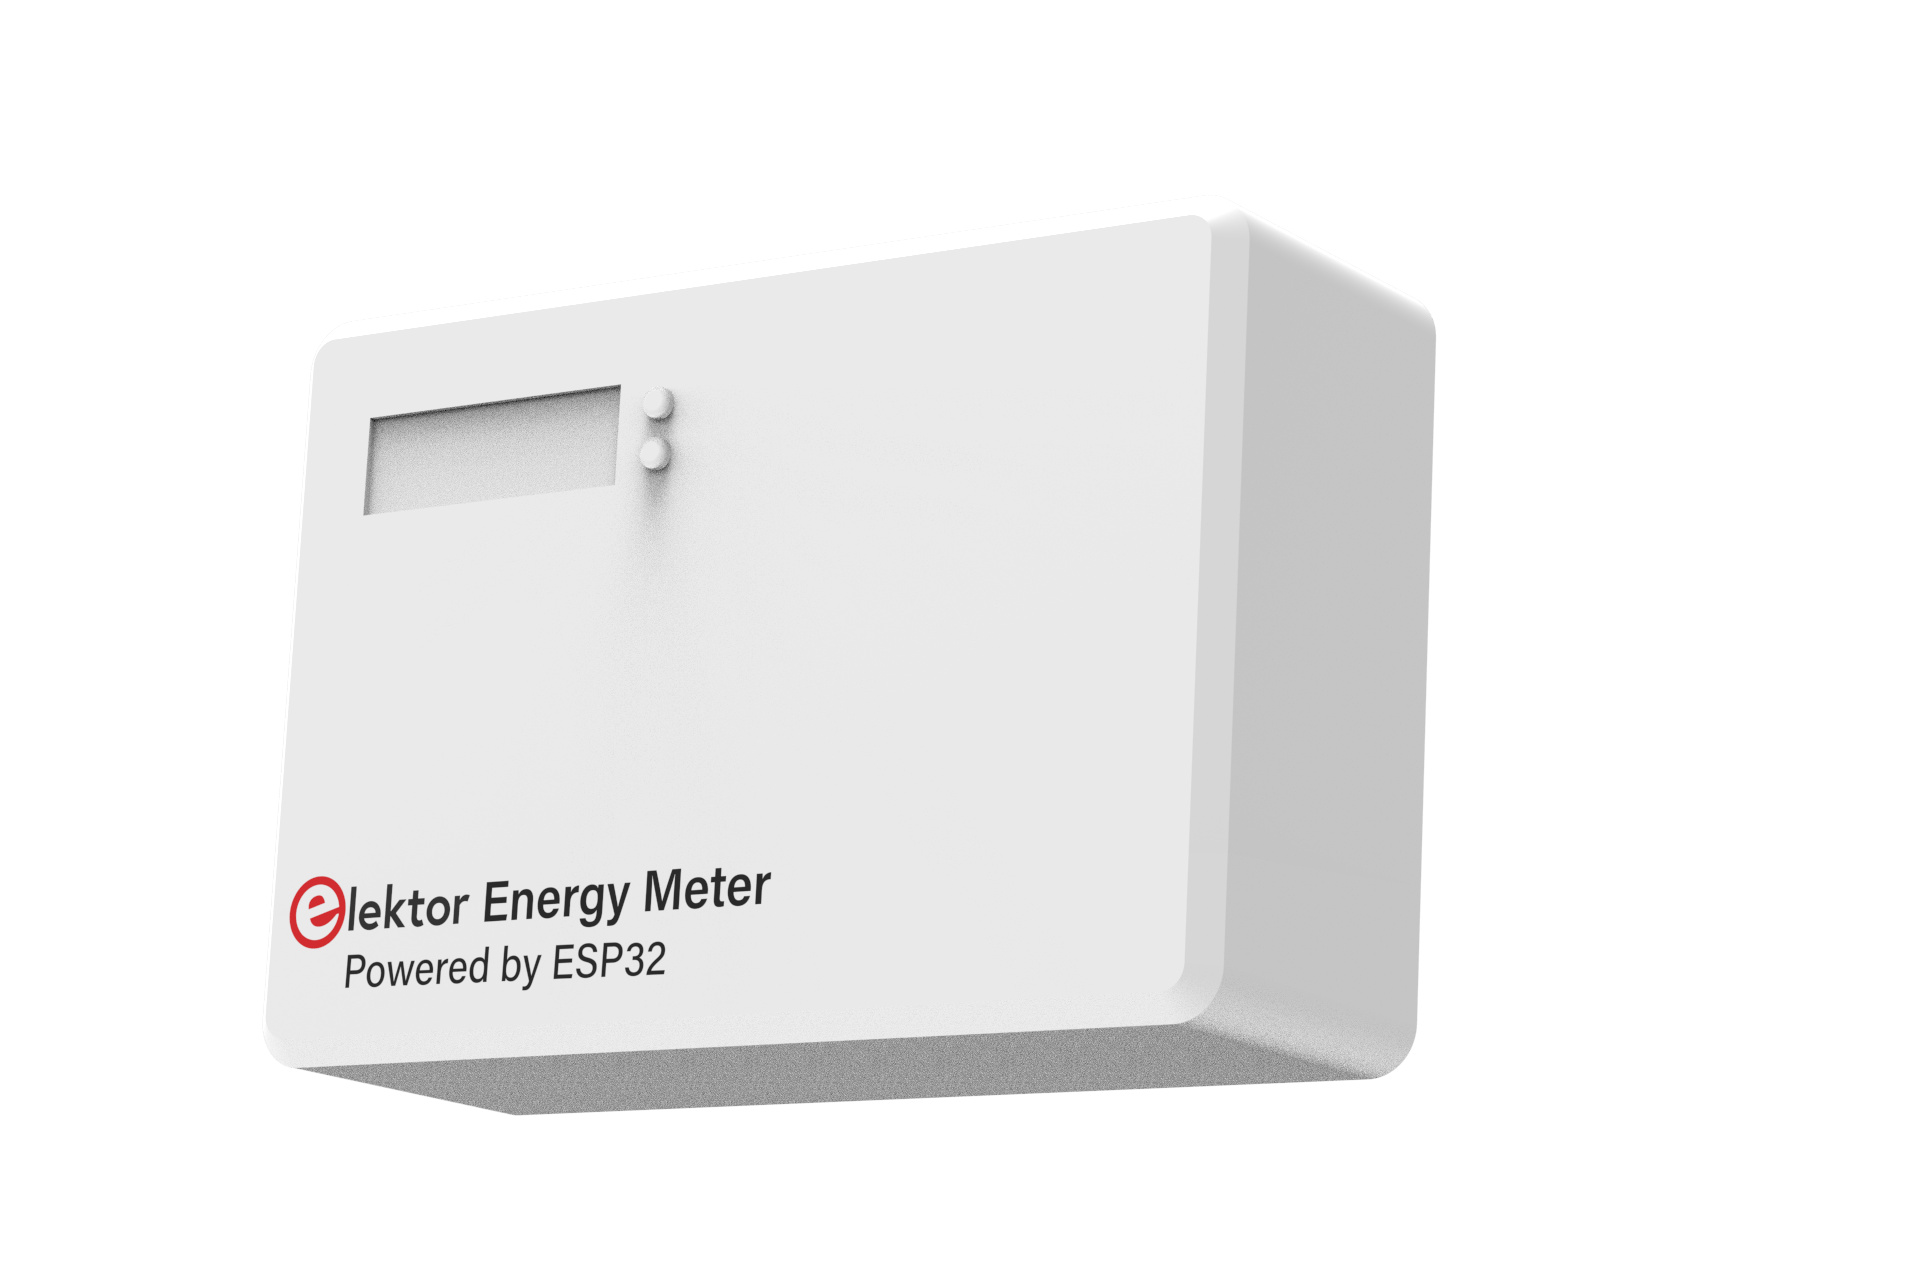 Projekt-Update: Energiemessgerät mit ESP32